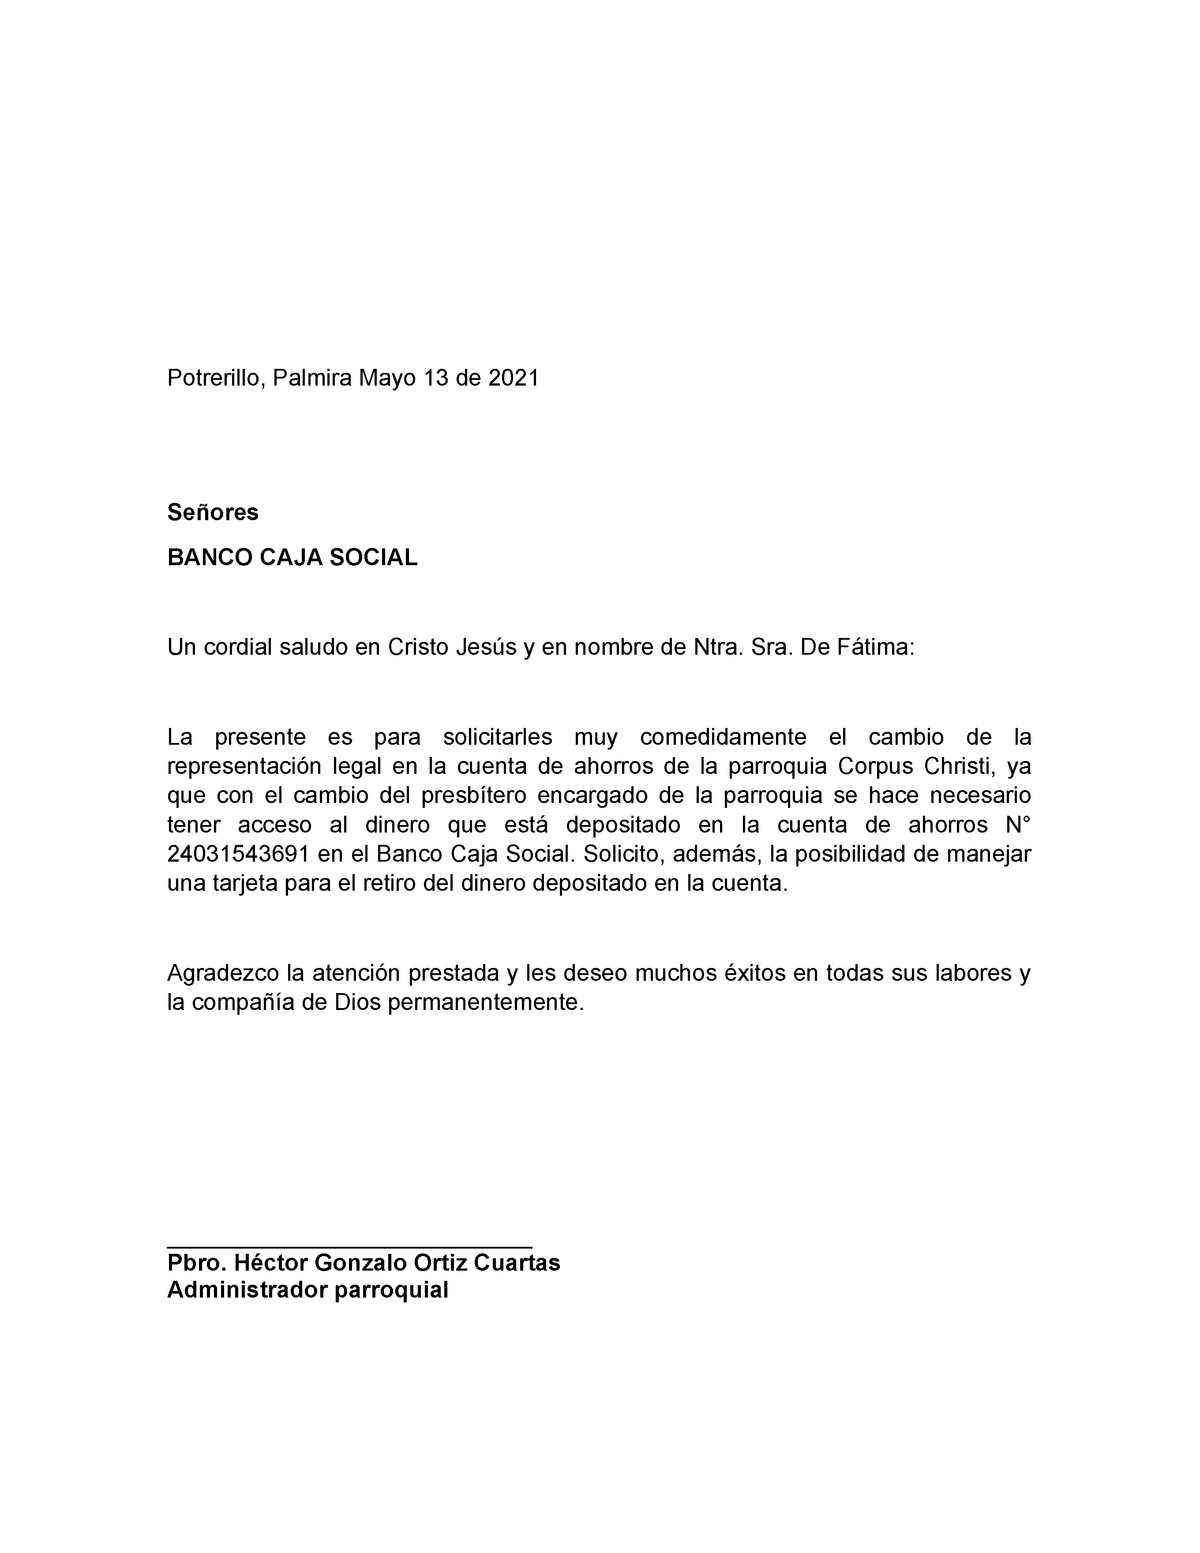 Solicitud cambio representante legal banco caja social - Potrerillo,  Palmira Mayo 13 de 2021 Señores - Studocu